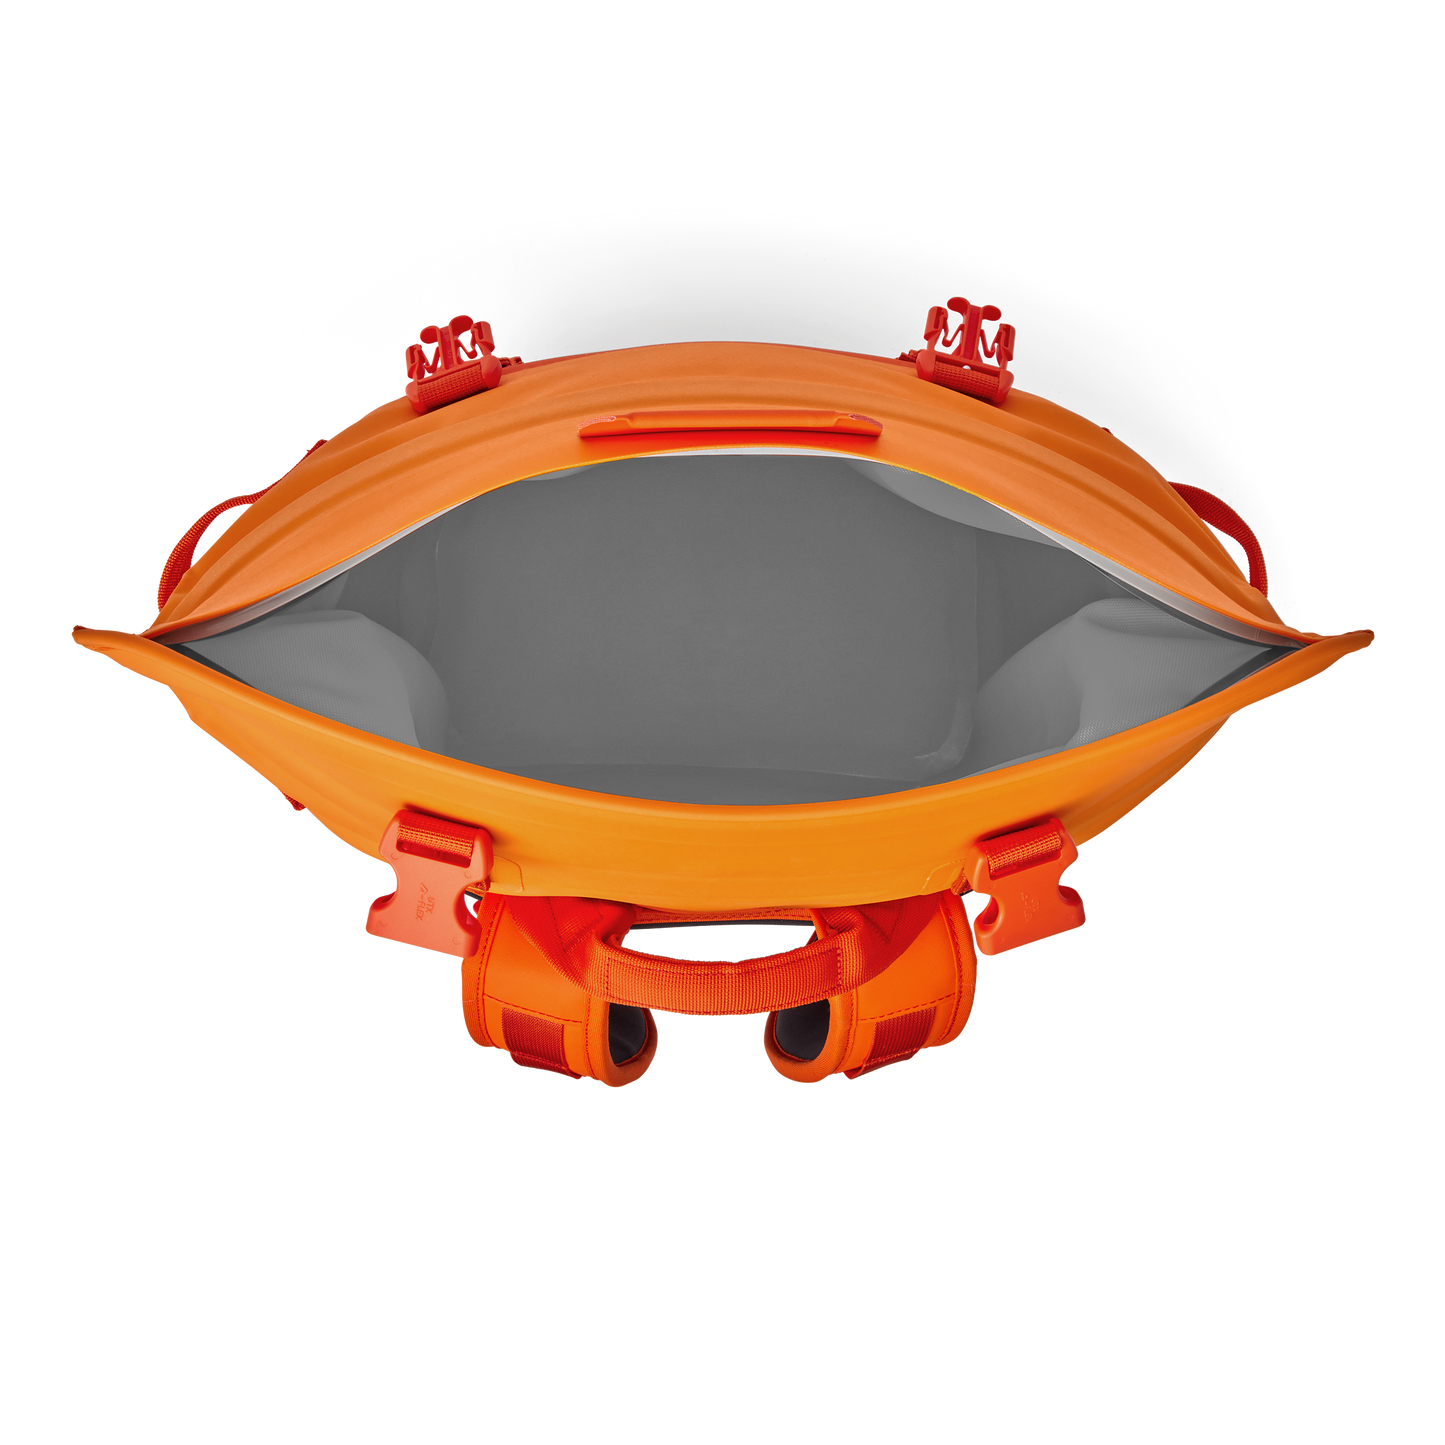 YETI Hopper® M20 Soft Backpack Cooler King Crab